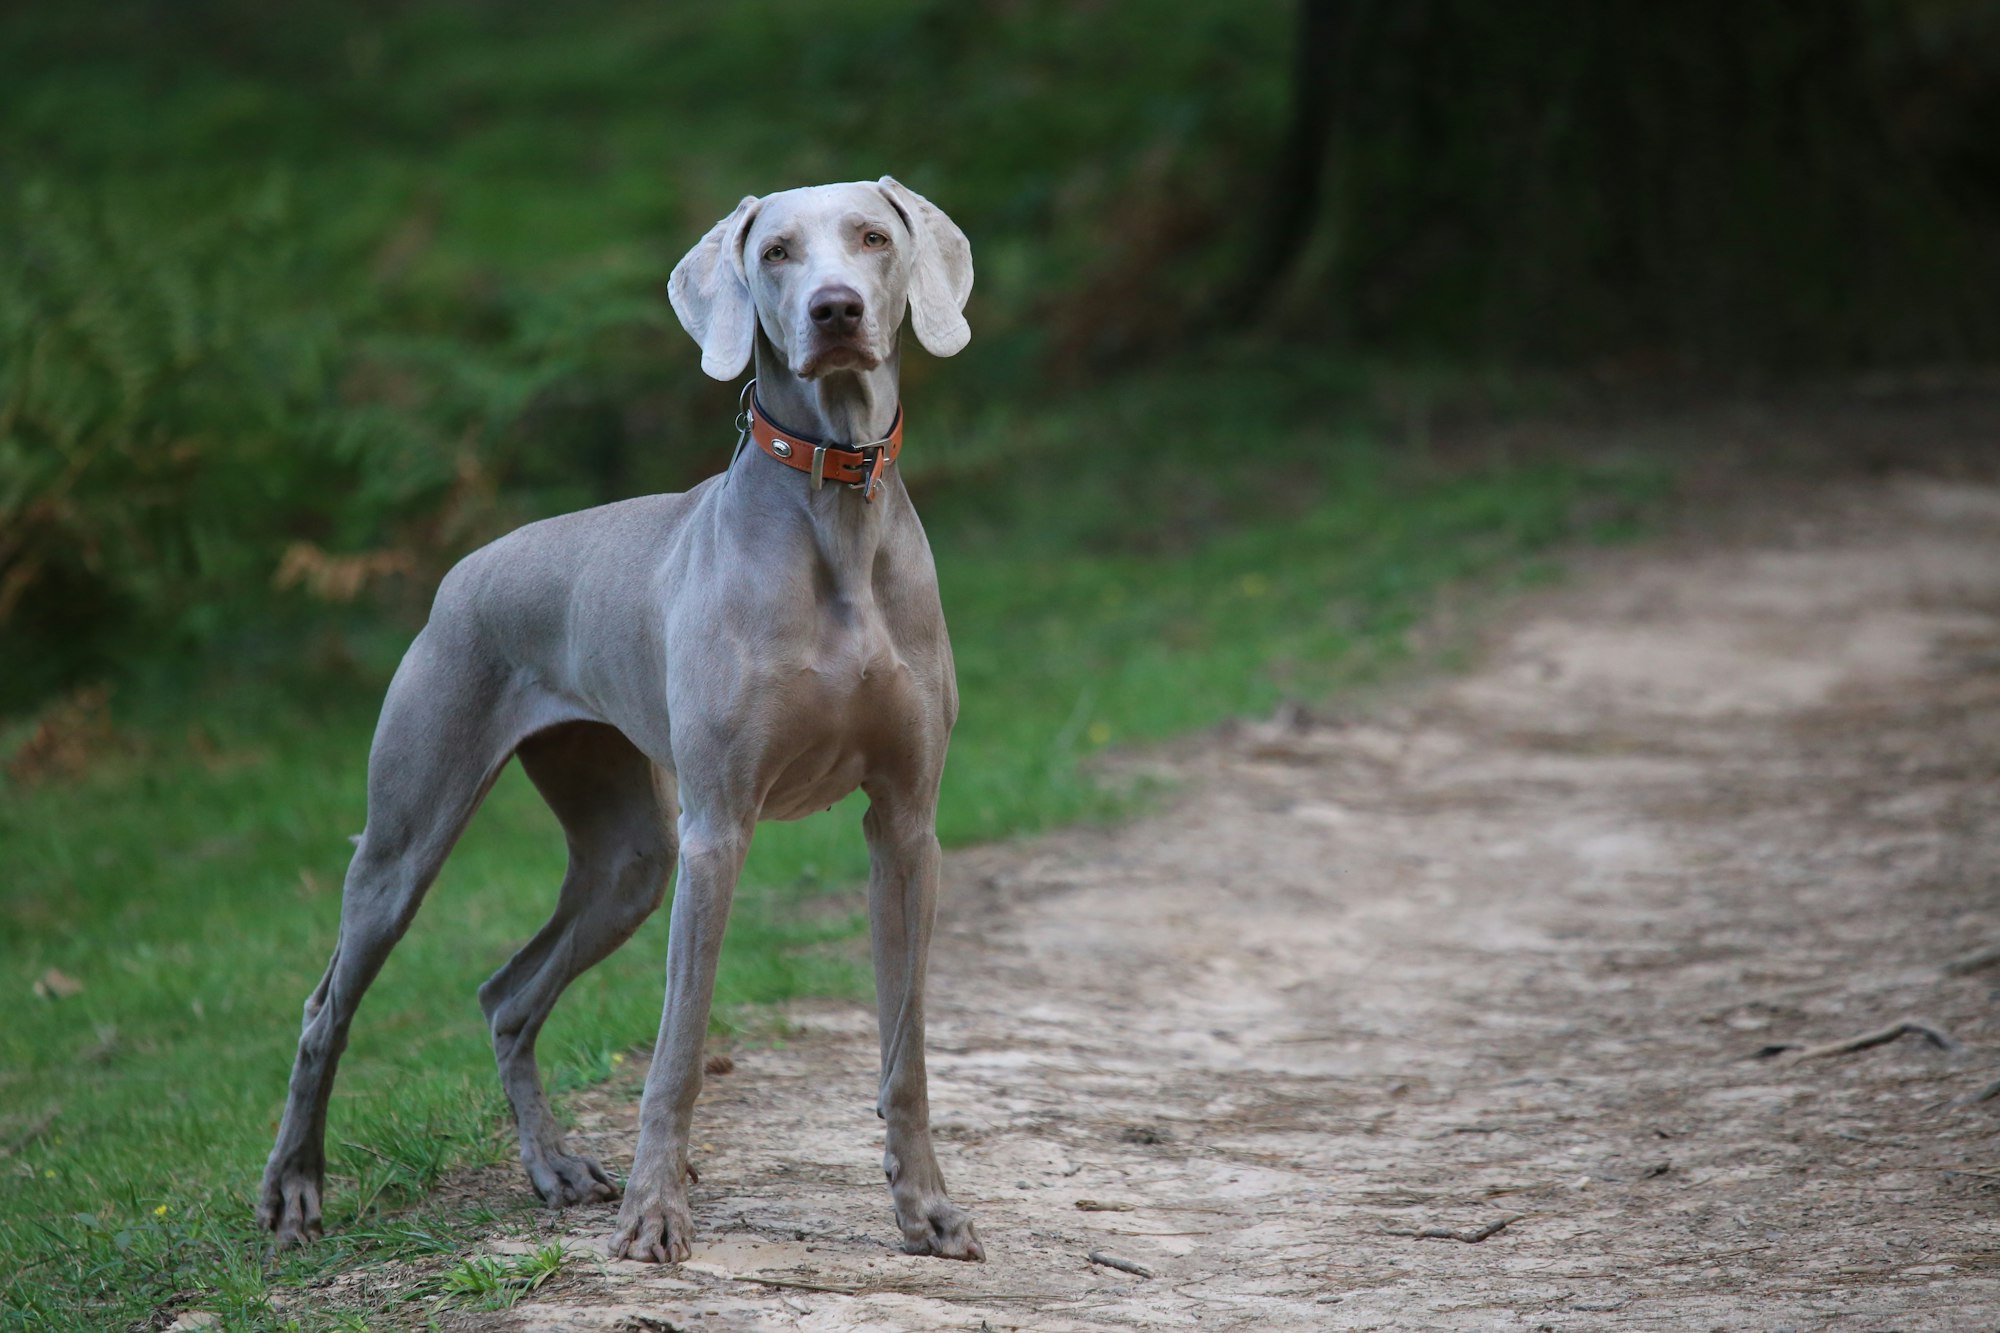 adult grey dog on dirt road